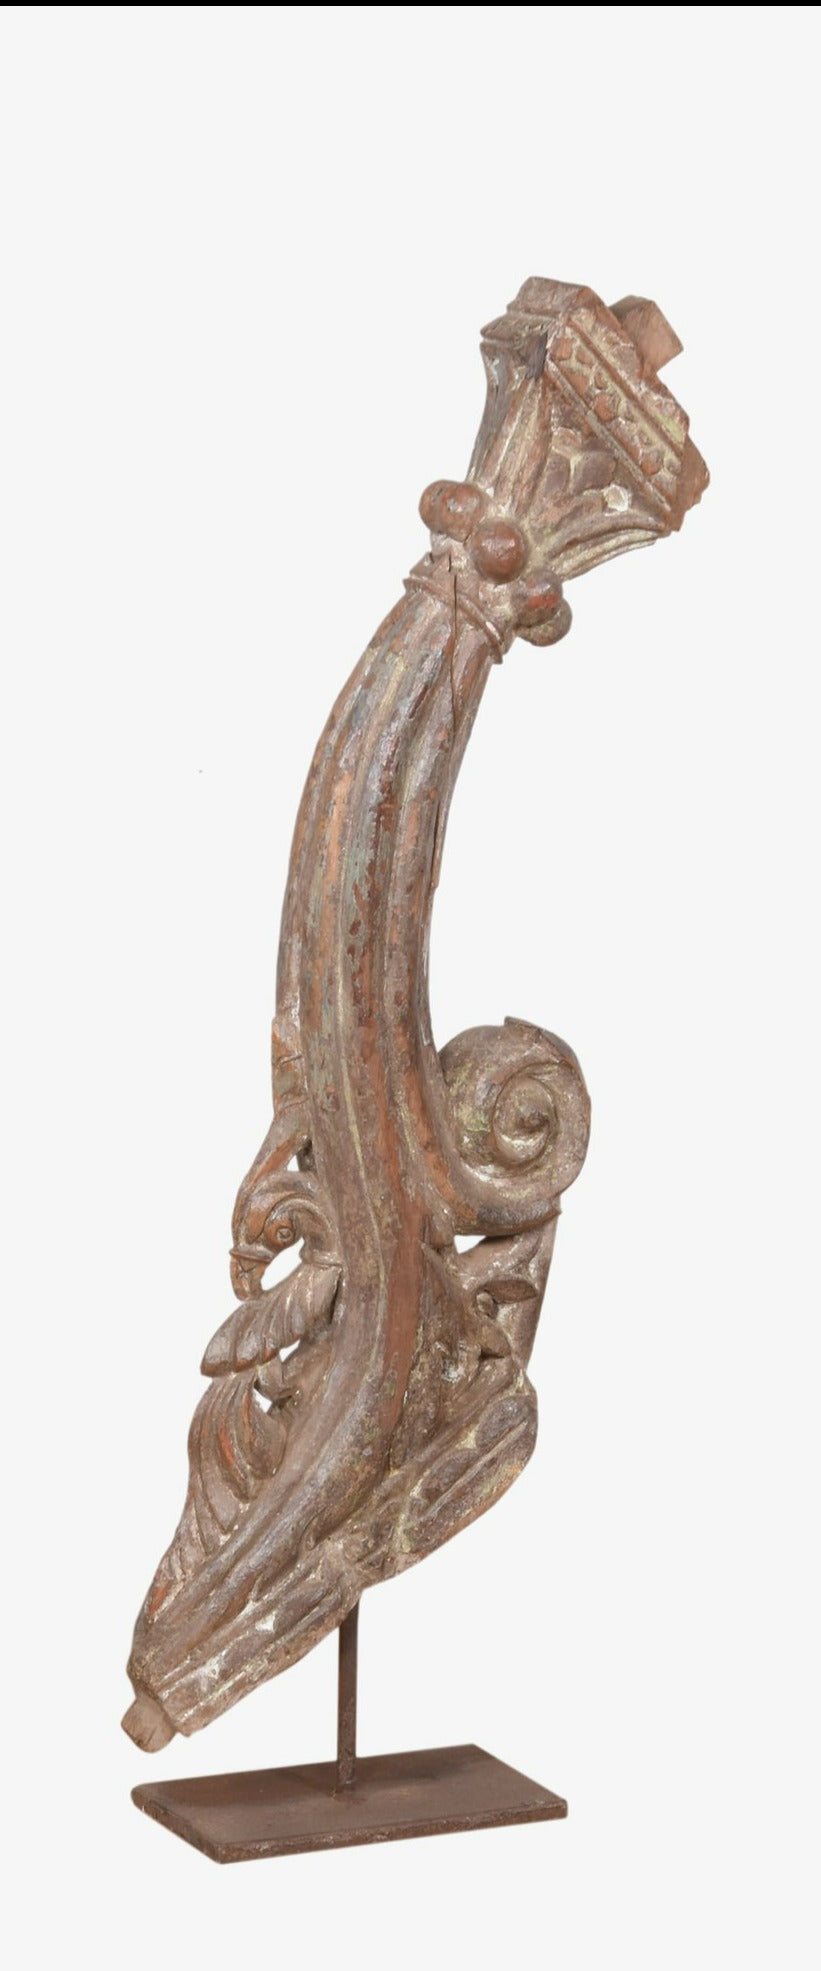 Figura decorativa de madera tallada núm. 13